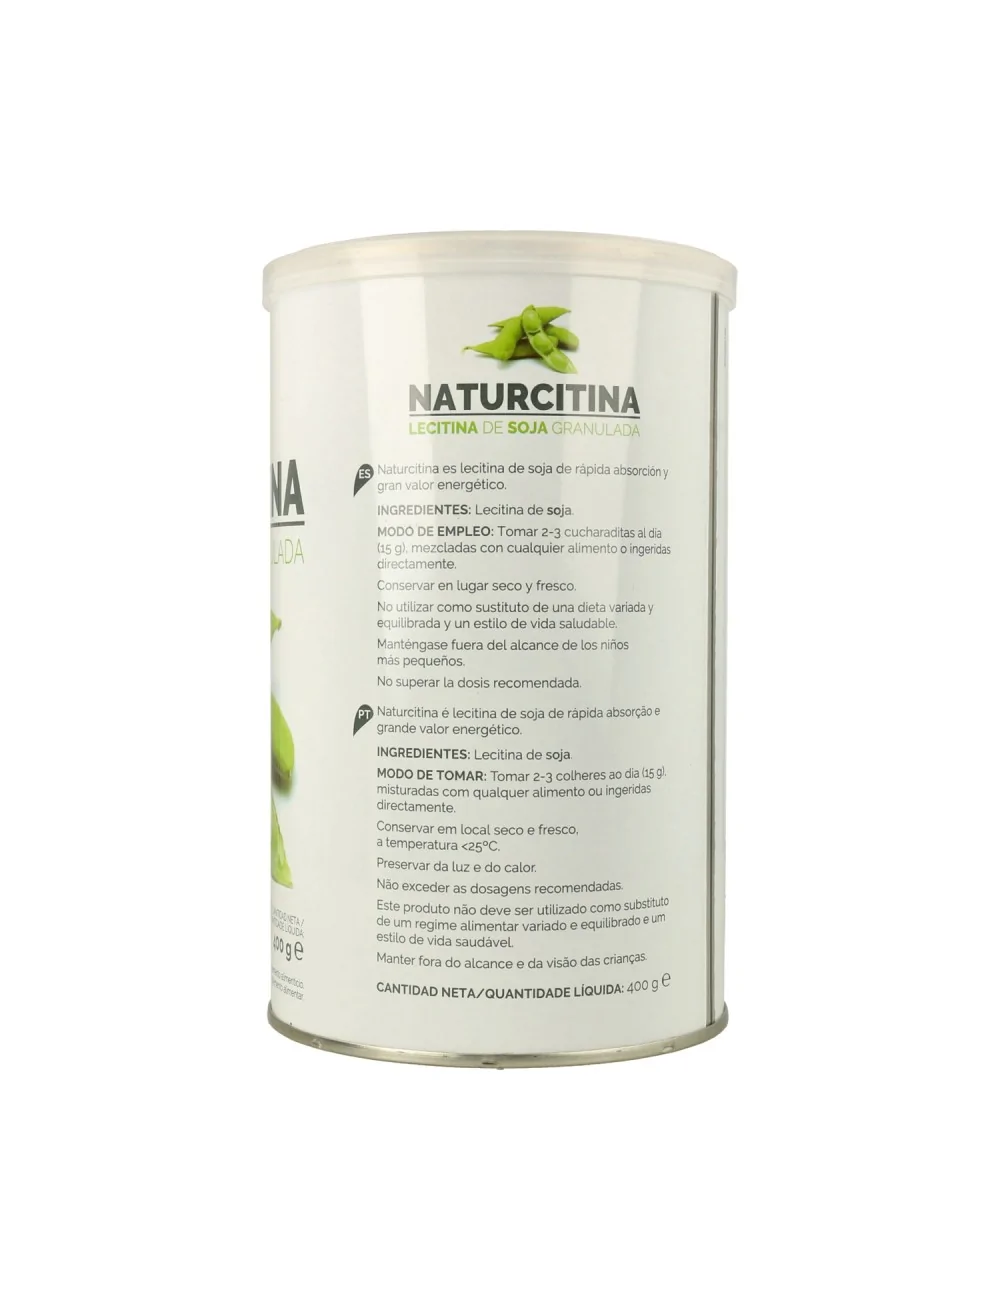 Naturcina (Lecitina de Soja Granulada) - 400 g. Soria Natural